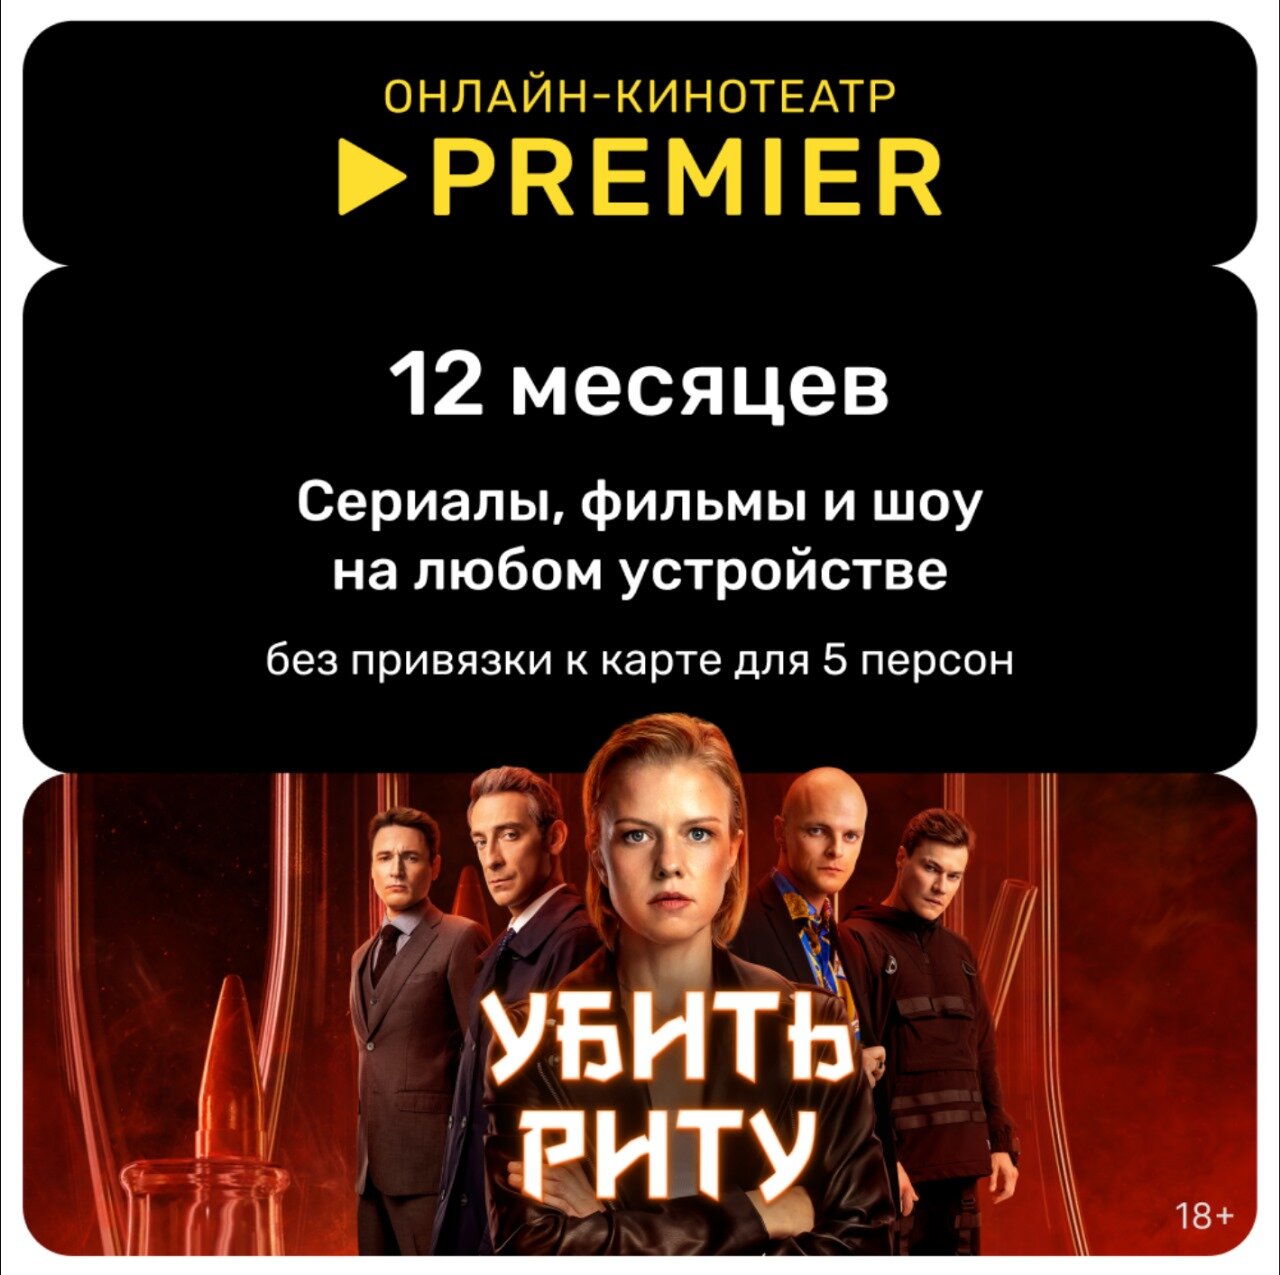 Подписка на онлайн-кинотеатр PREMIER (12 месяцев)